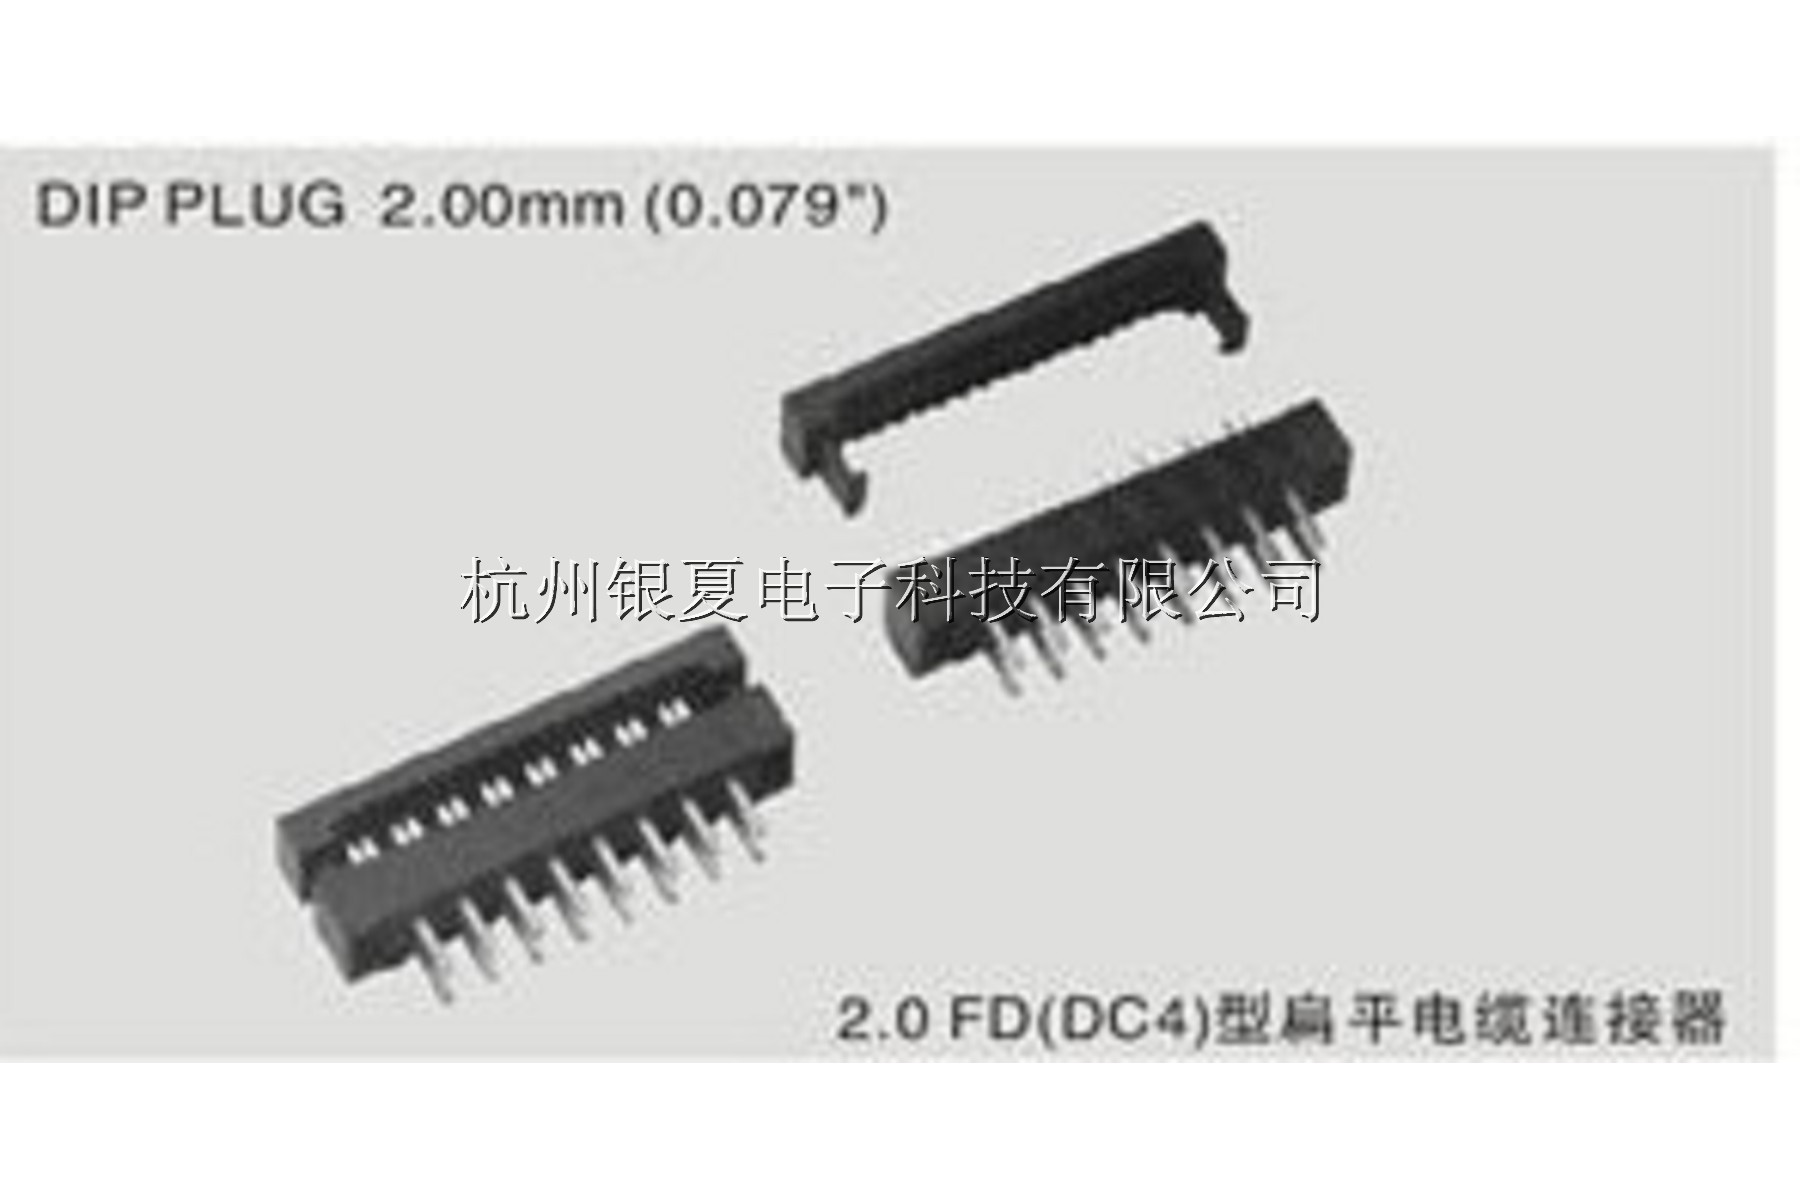 ⑦2.0FD(DC4)型扁平电缆连接器DIP PLUG 2.00mm (0.079')